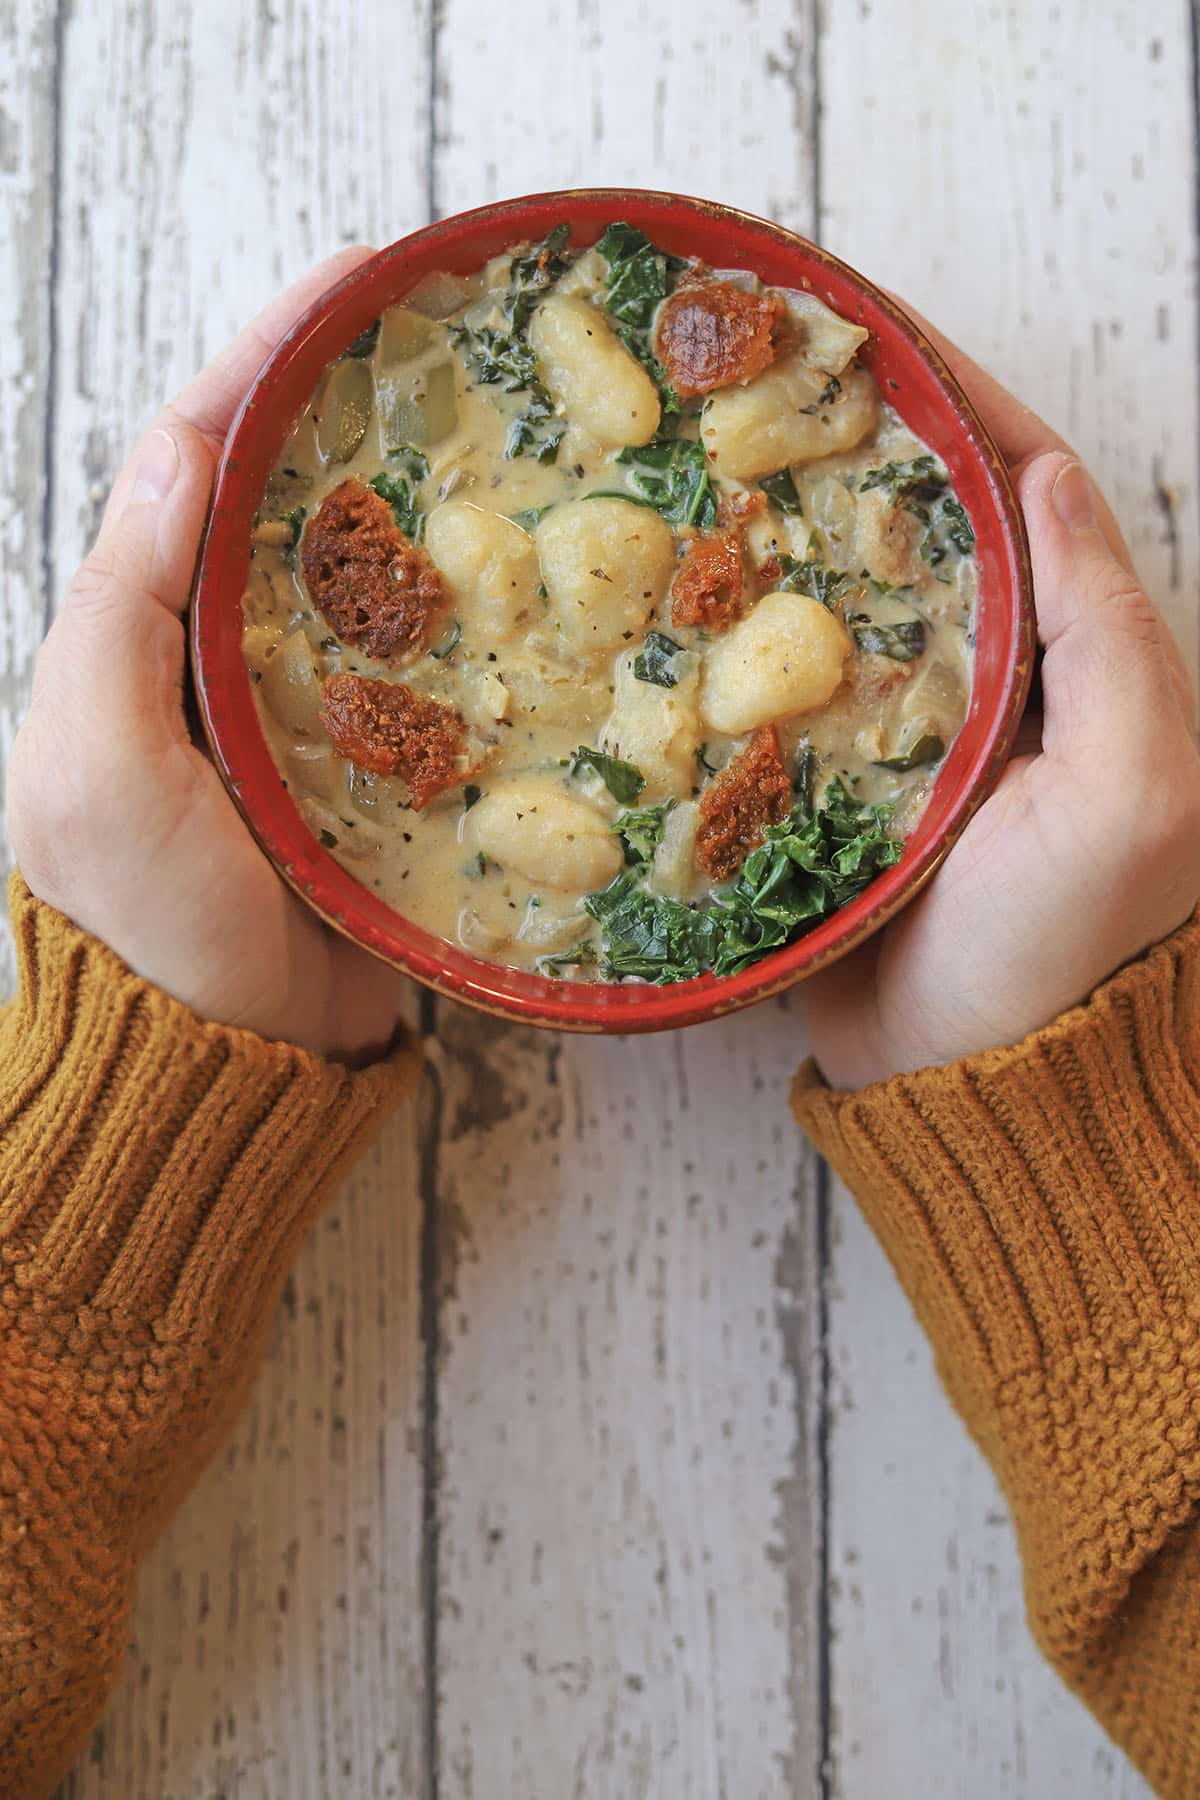 Hands holding bowl of vegan gnocchi soup.